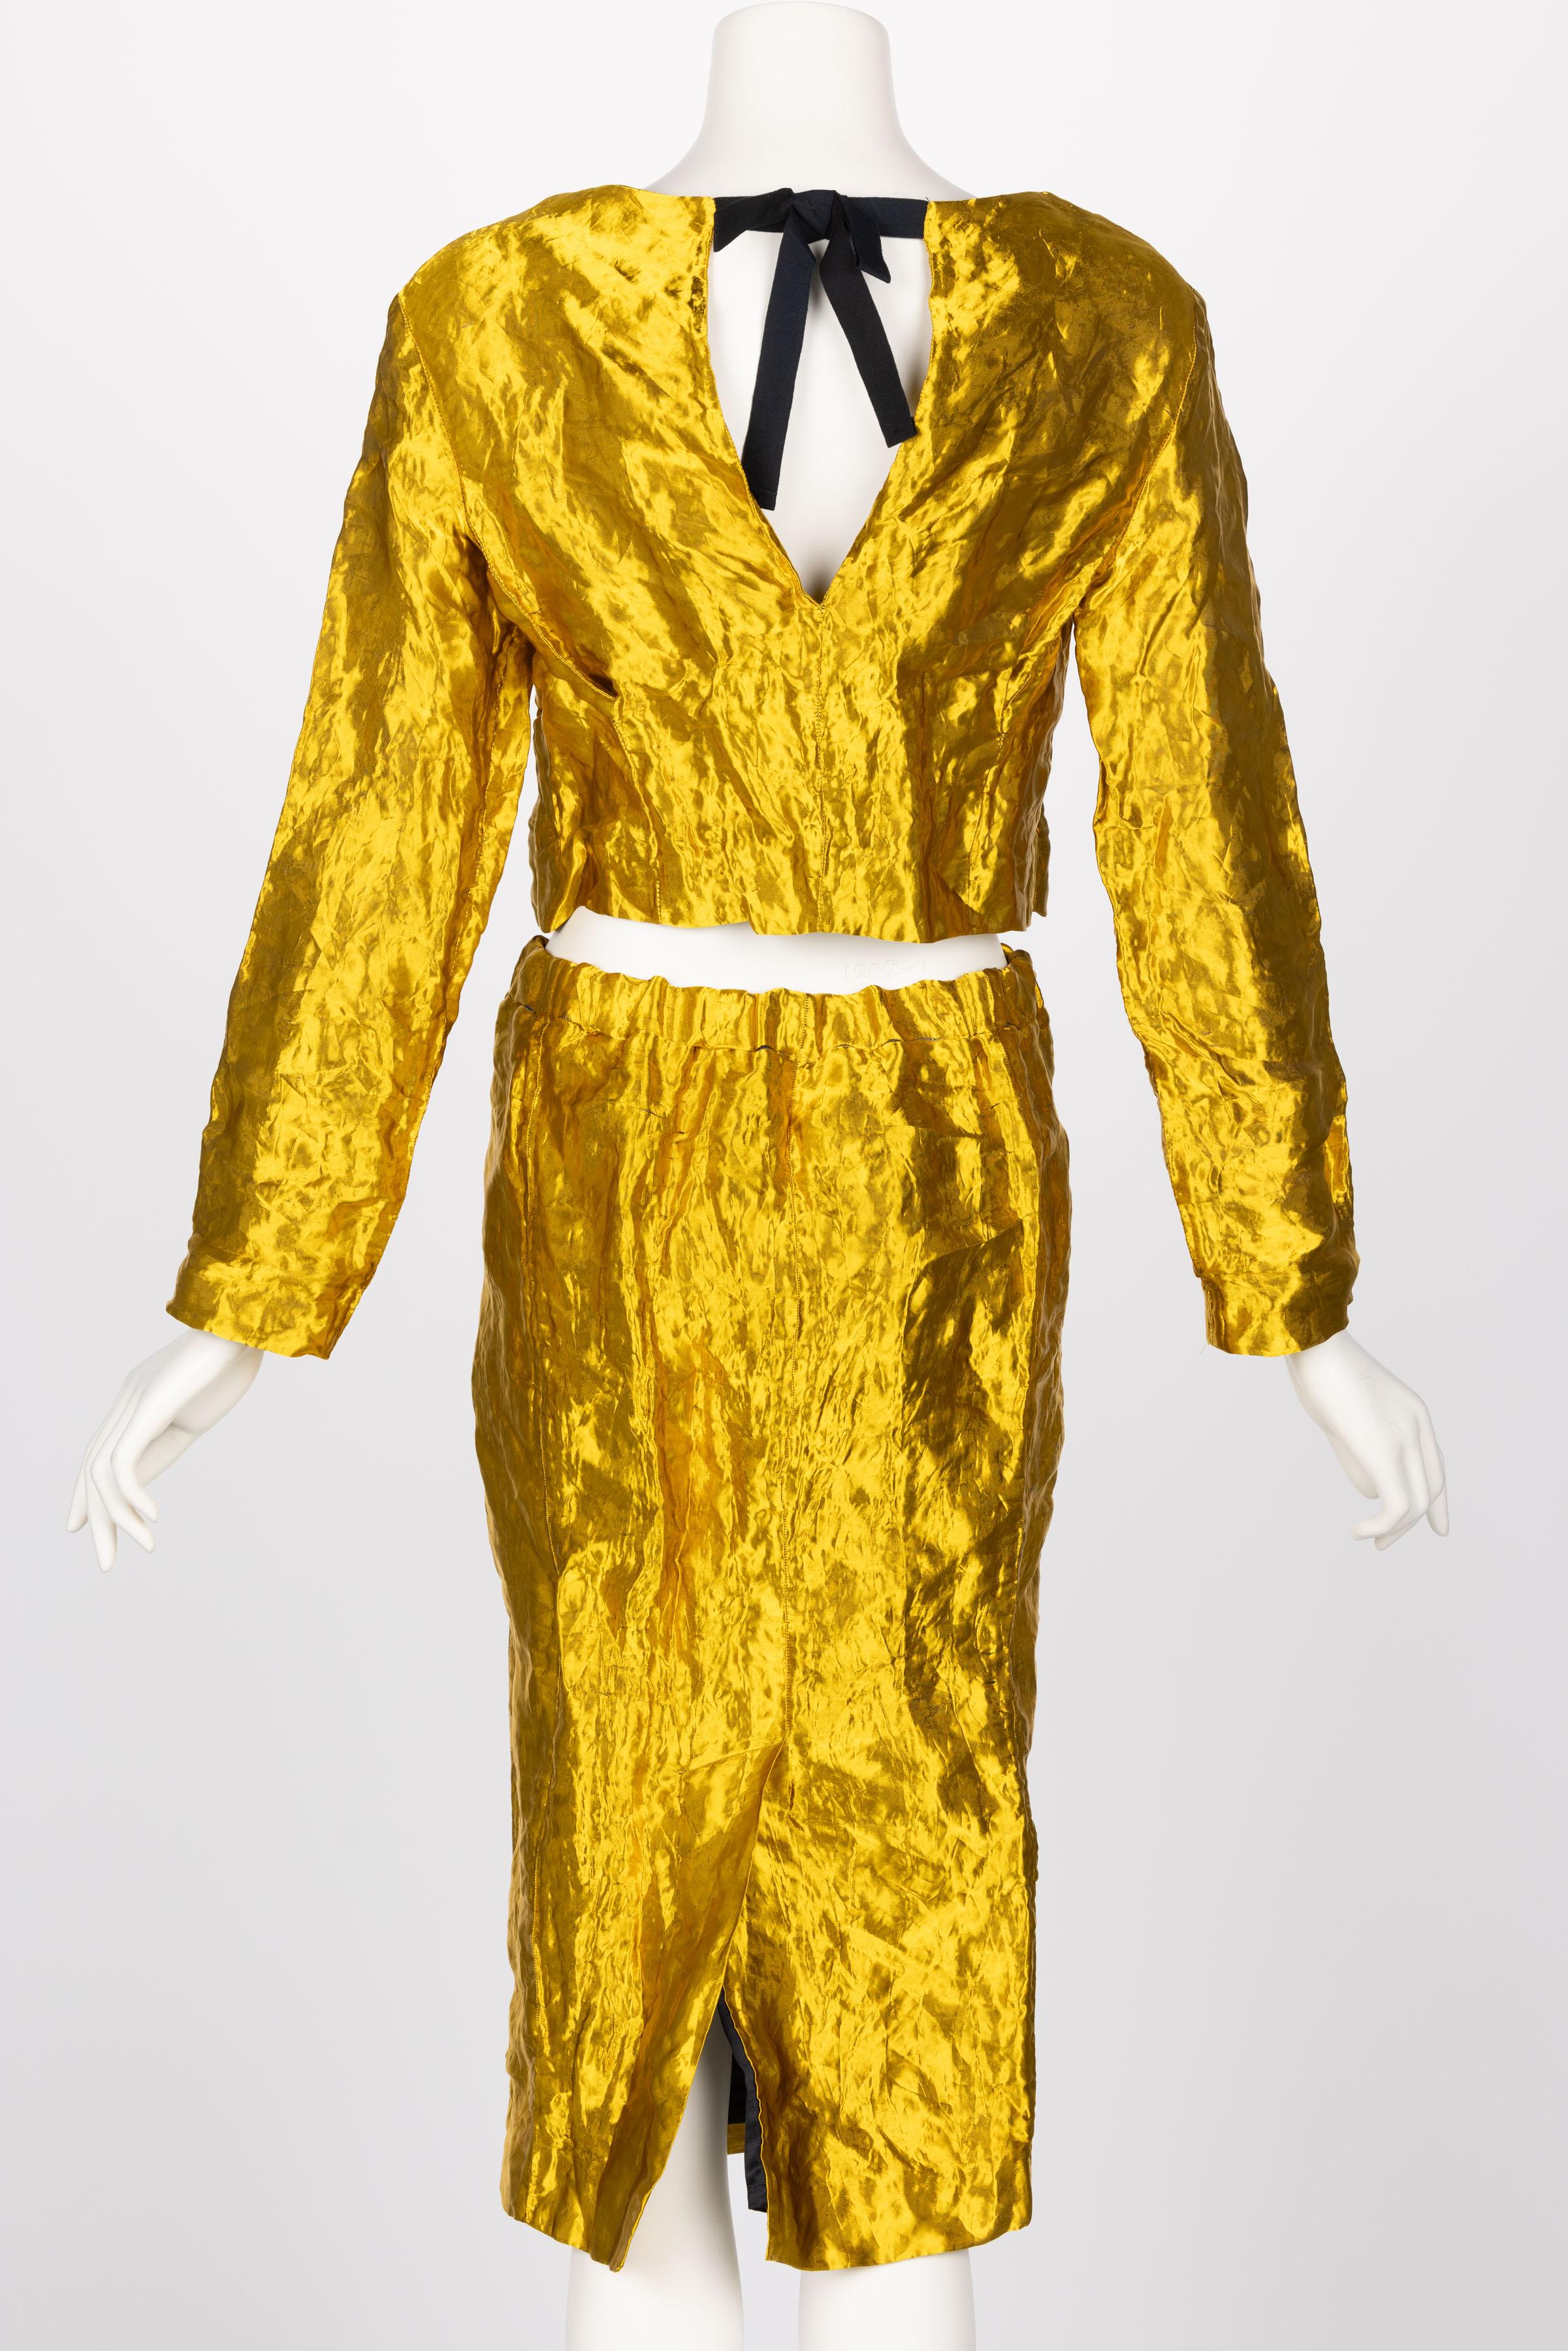 Prada Gold Metal Jacket Top & Skirt Set Spring 2009 For Sale 2